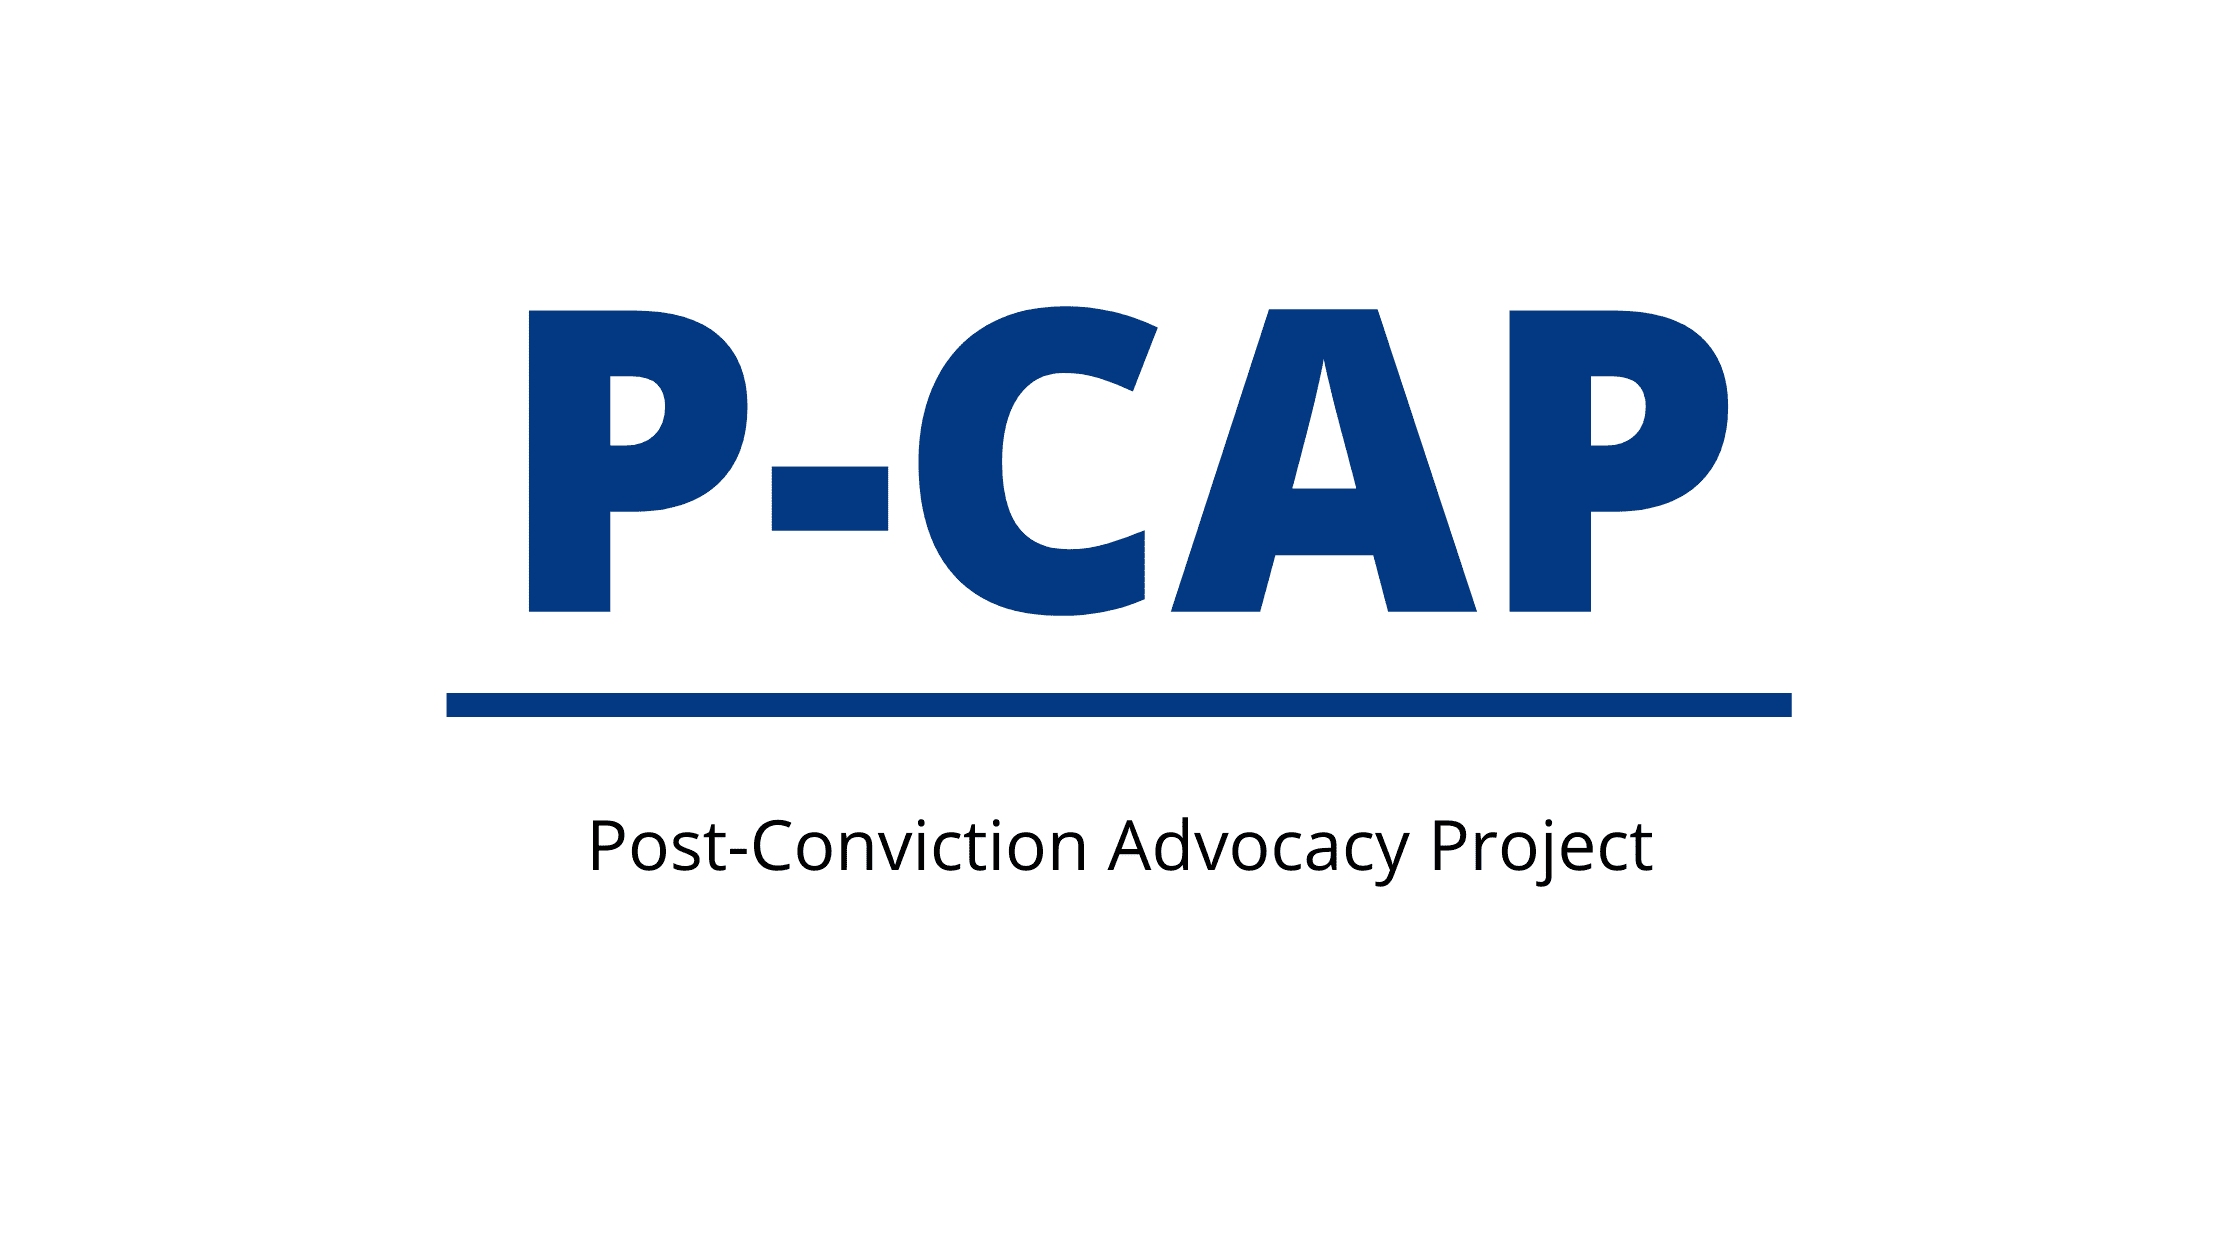 Post-Conviction Advocacy Project logo